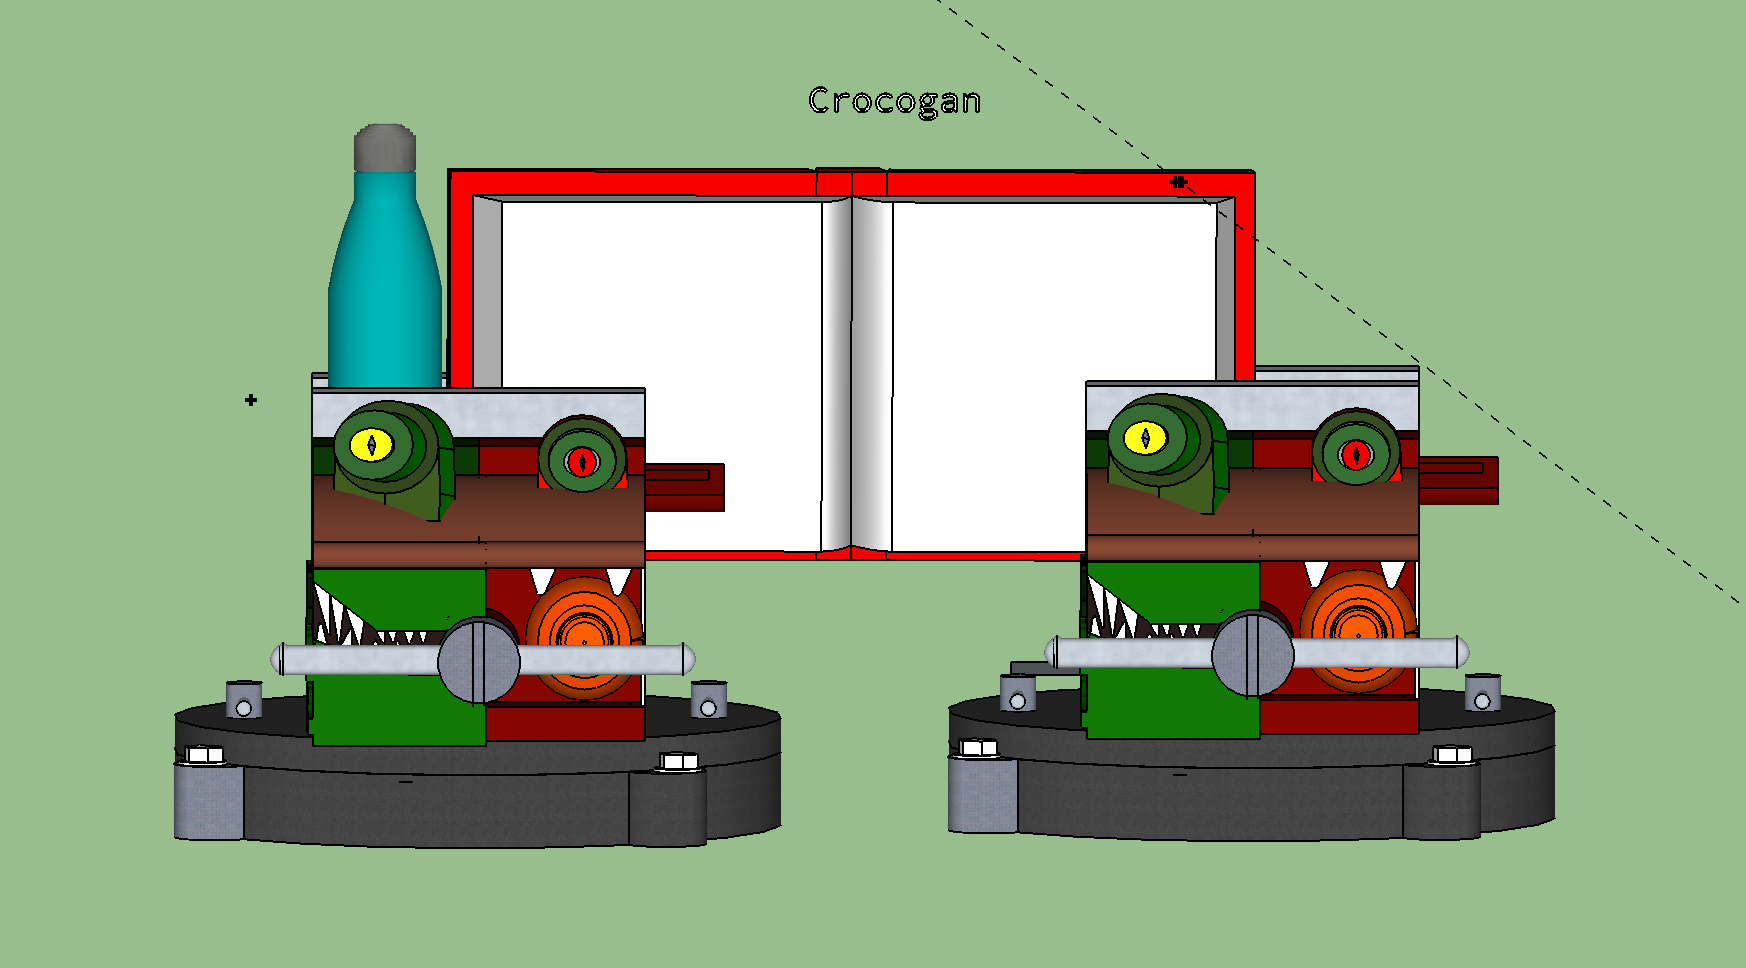 Crocogan (Crocodile_Dragon) vice for a semi-paralysed stroke survior